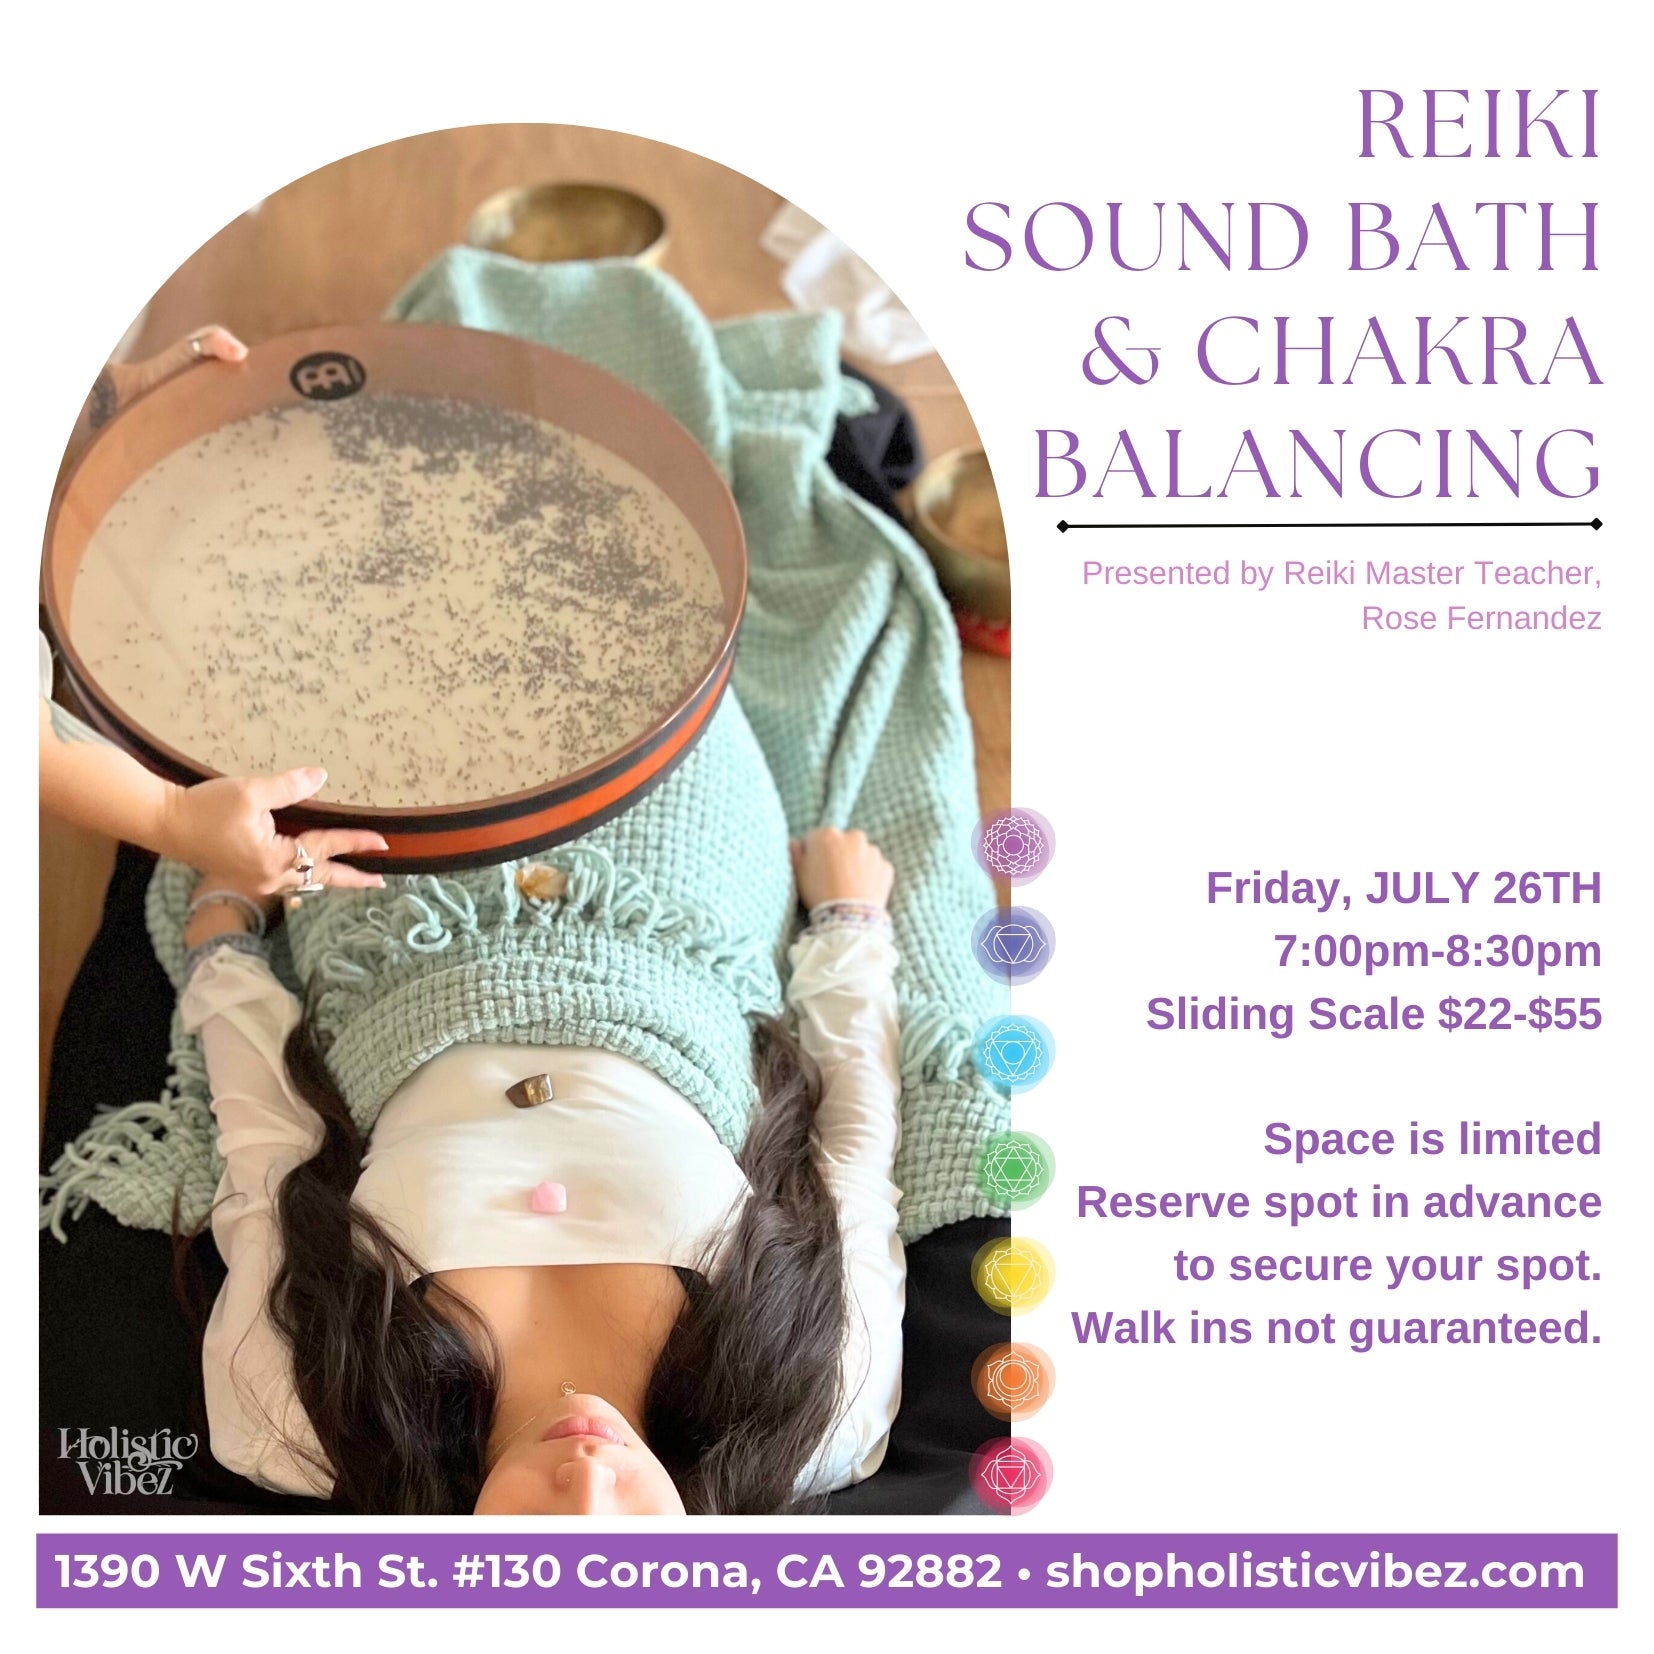 Reiki Sound Bath & Chakra Balancing: Friday, July 26th